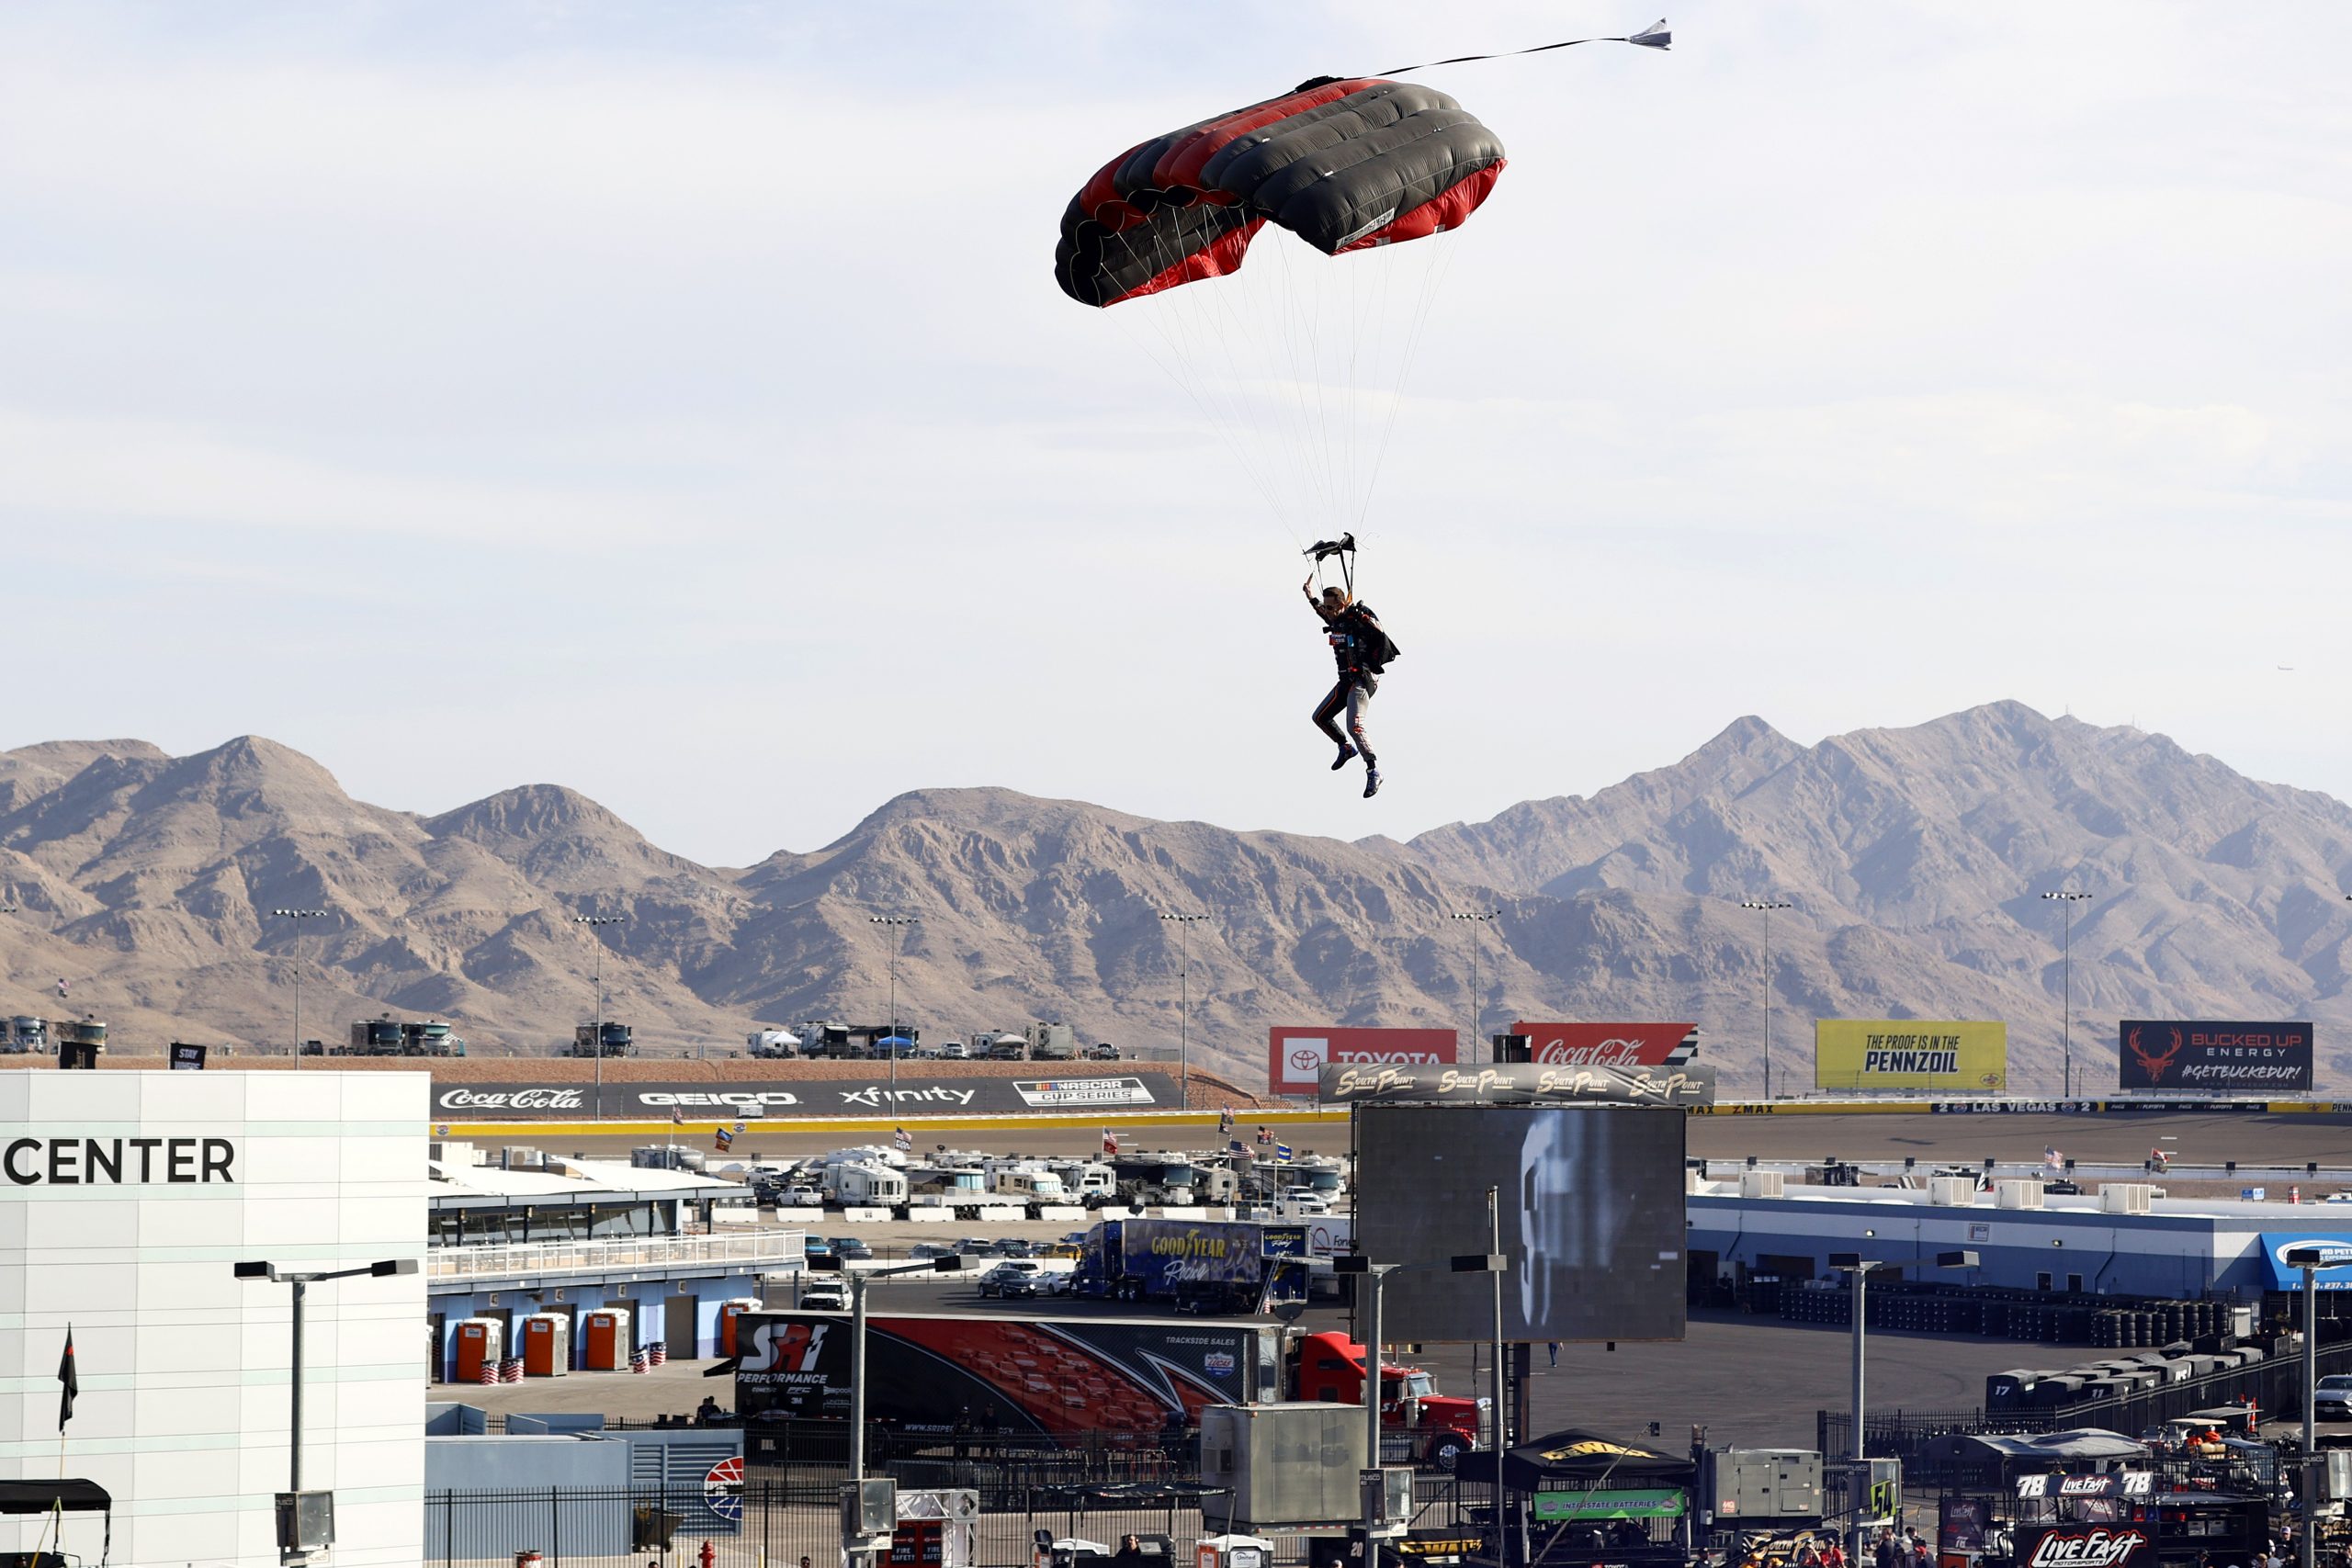 Matt Jaskol to Skydive into Track Prior to Race in Las Vegas